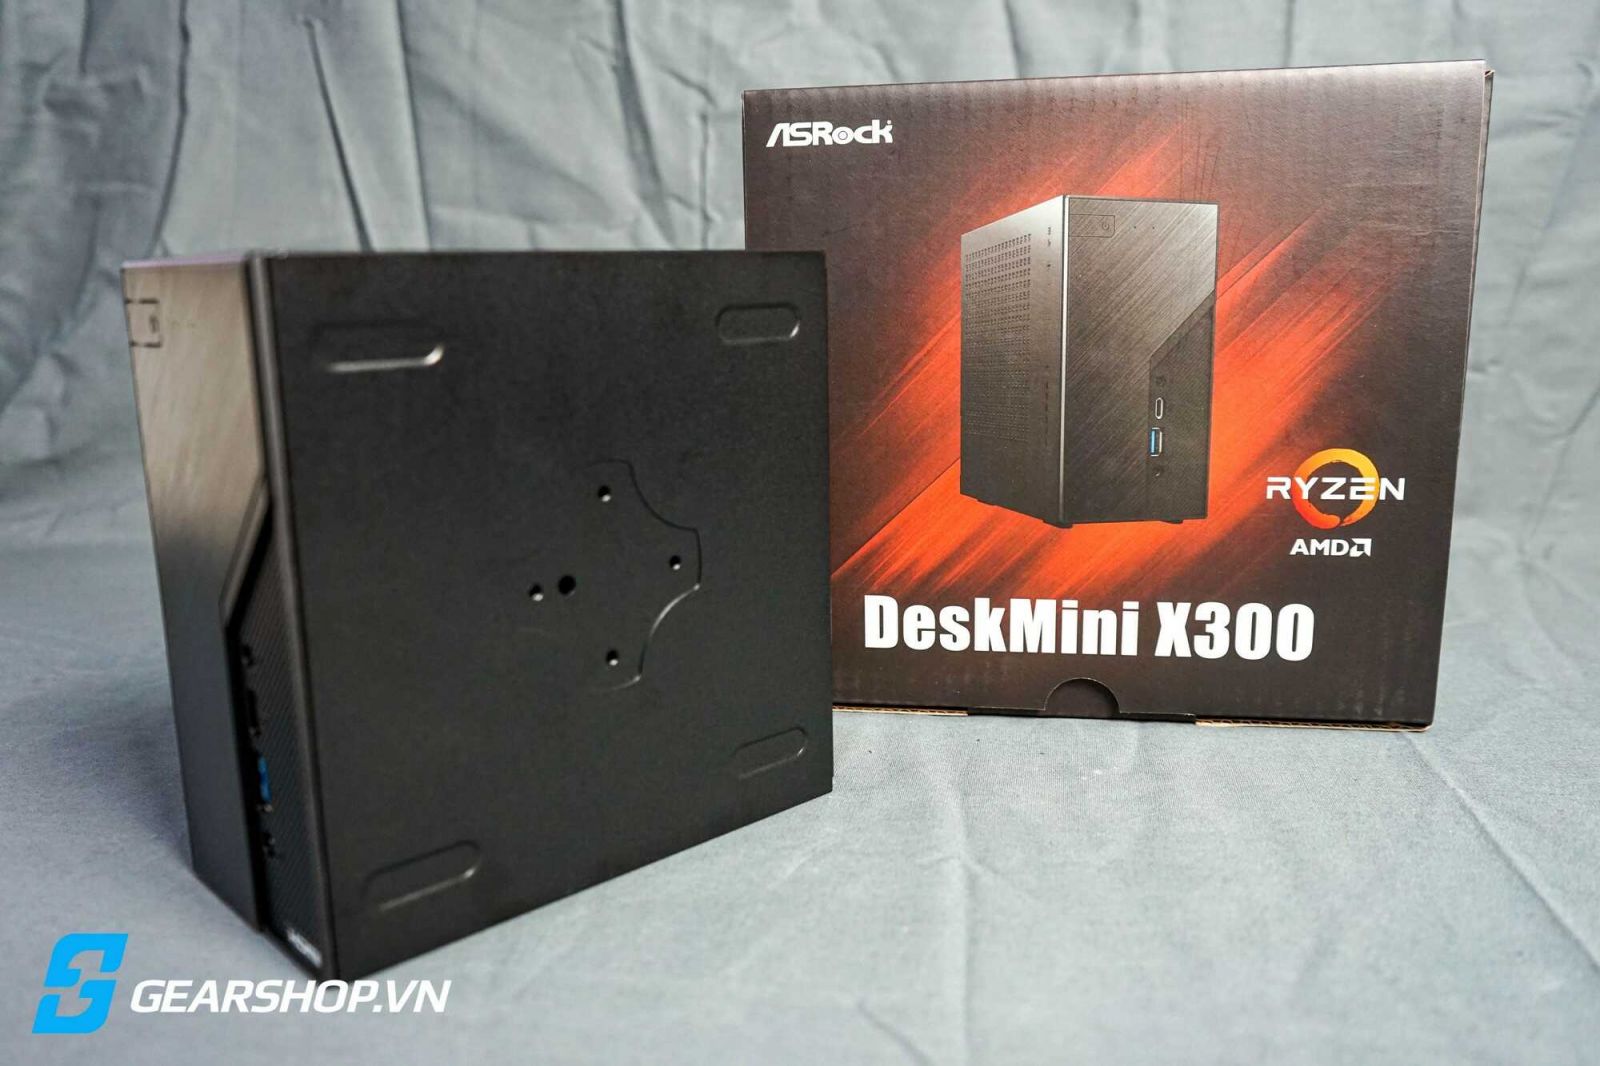 Máy tính bộ Asrock DeskMini X300 AMD Ryzen 5 5600G - Gearshop.vn